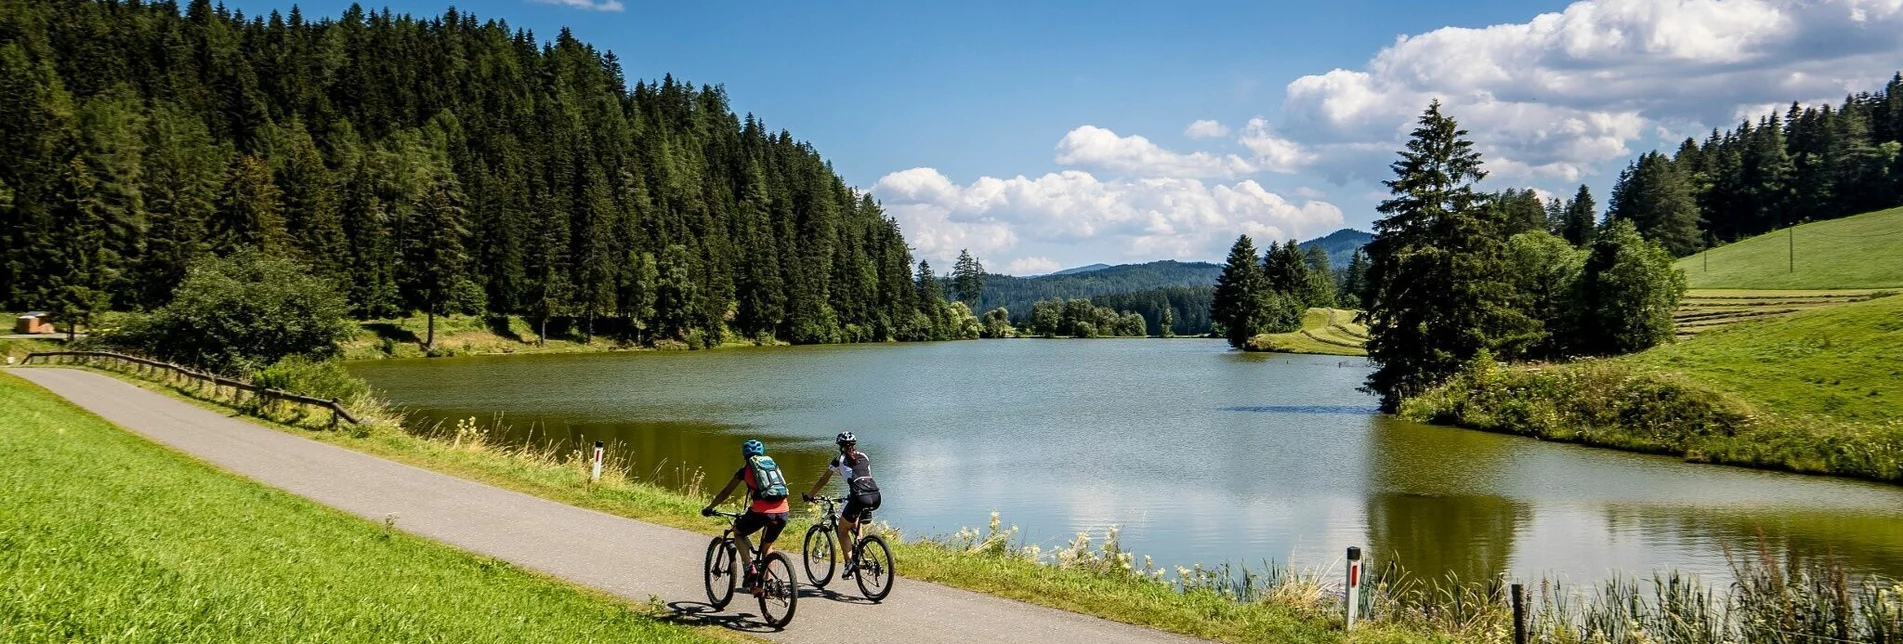 Mountain Biking Pond round - Touren-Impression #1 | © Tourismusverband Region Murau